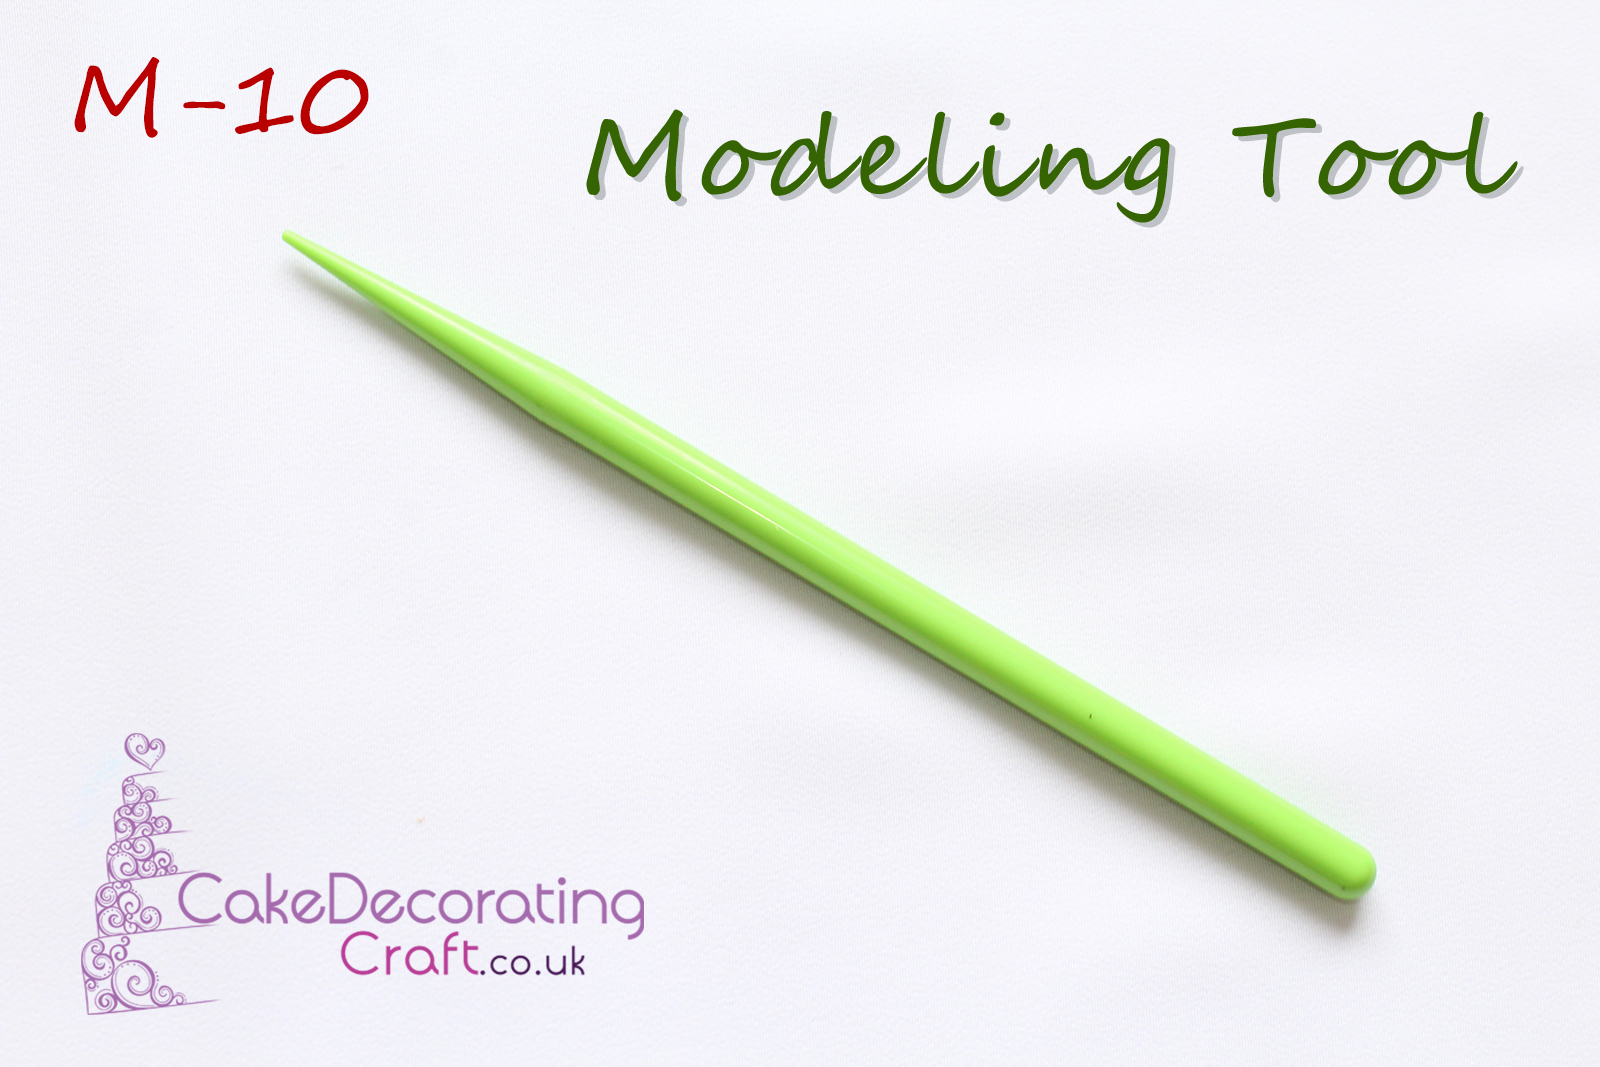 Cake Decorating Craft Modelling Tools | Double Ended | Gum Paste Flower Paste Modelling Sugar Paste Craft | M-10